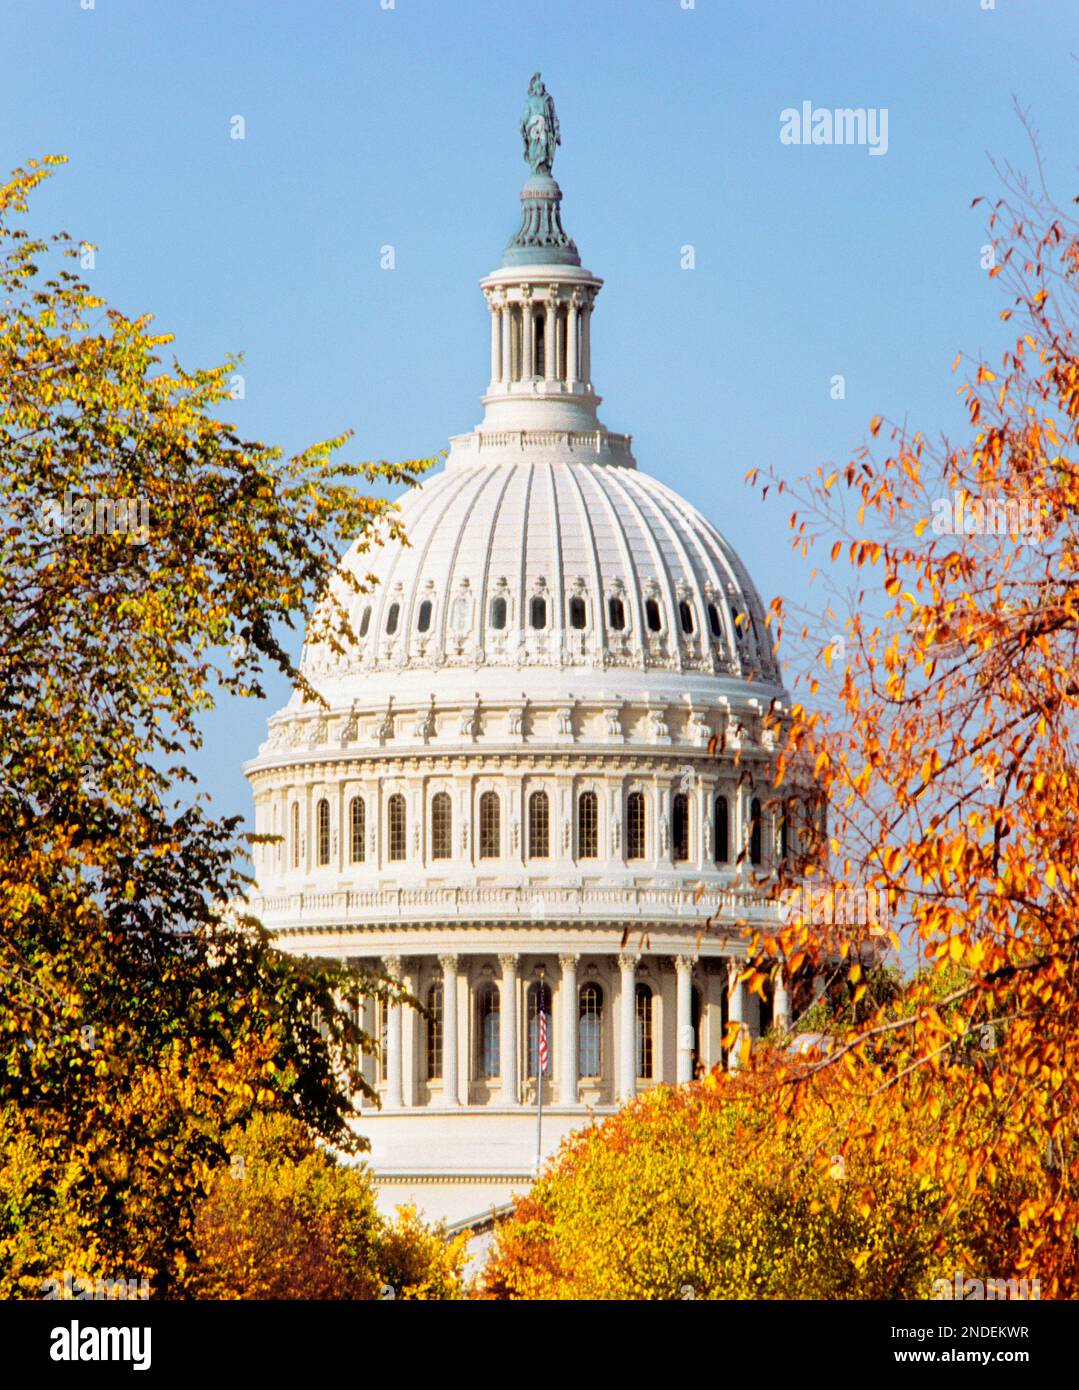 US Capitol Building rotunda Washington DC USA. Autumn foliage Stock Photo